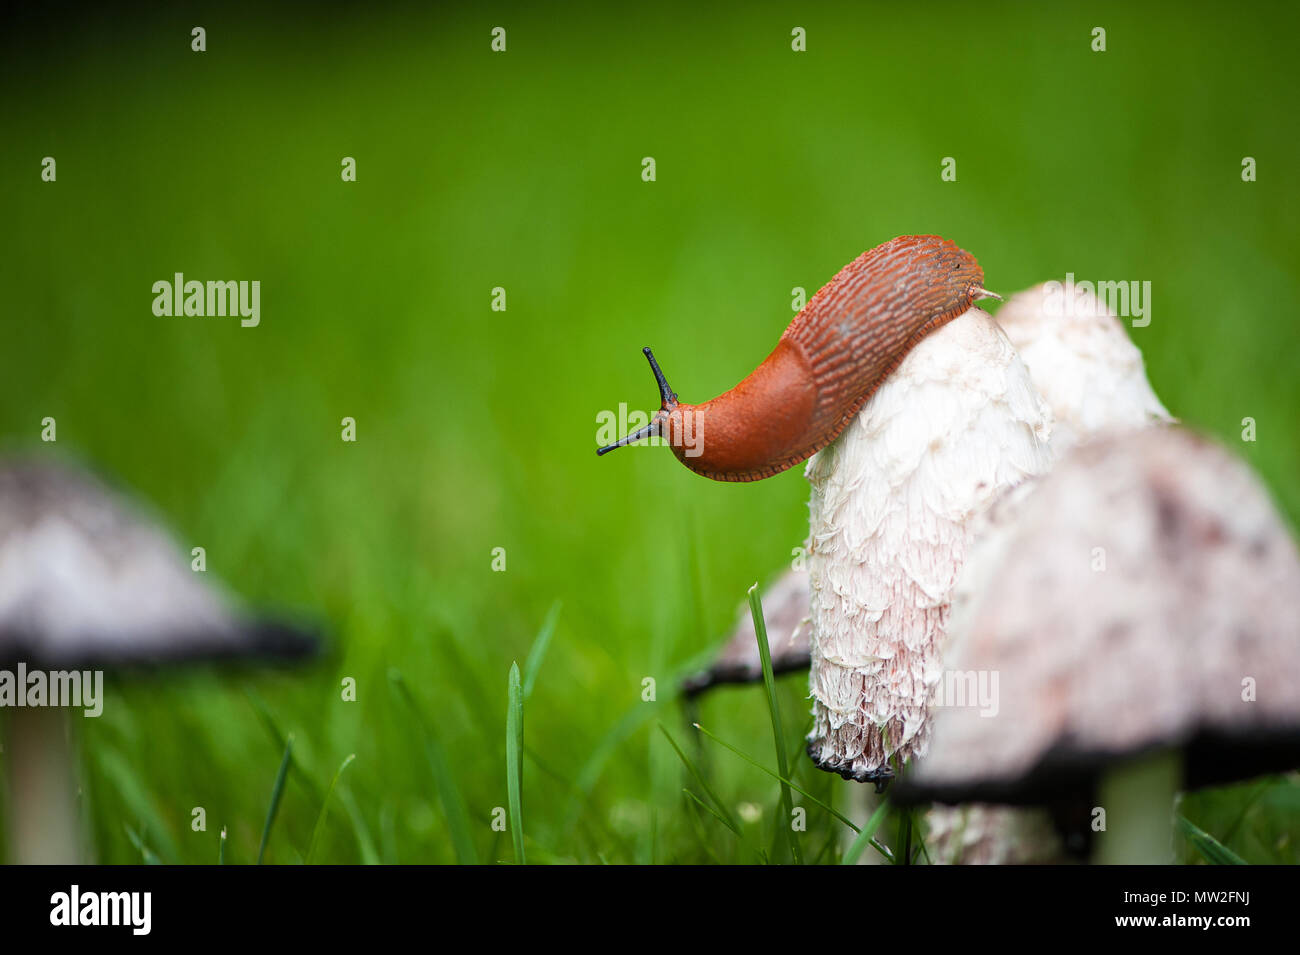 Slug mushrooms hi-res stock photography and images - Alamy